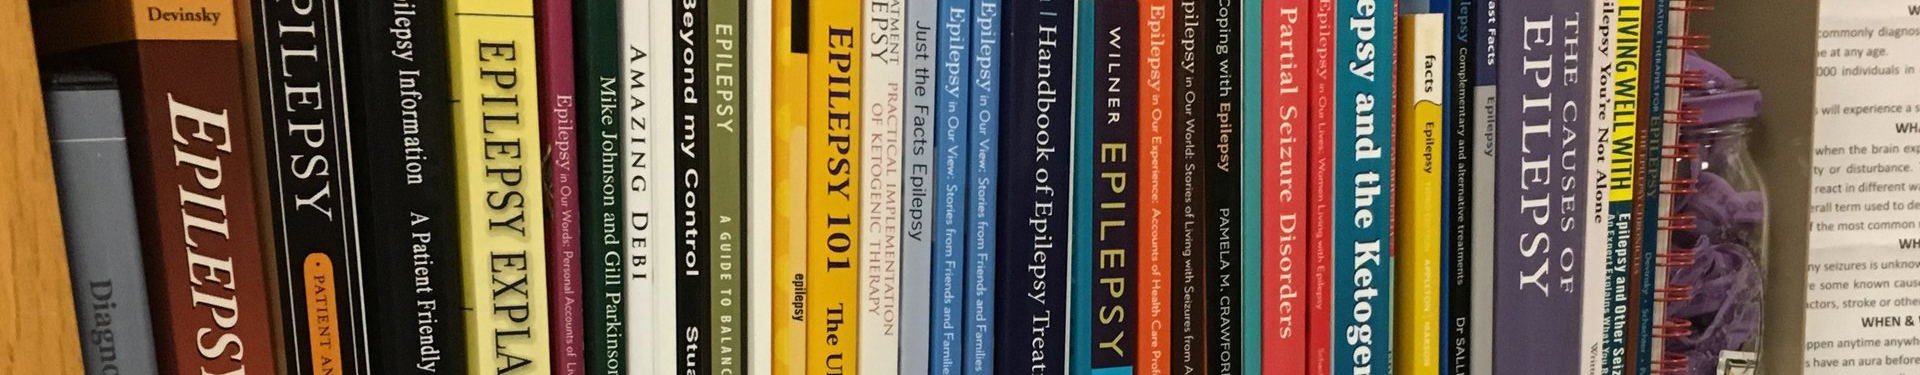 Eric's Corner Epilepsy Resources Book Shelf